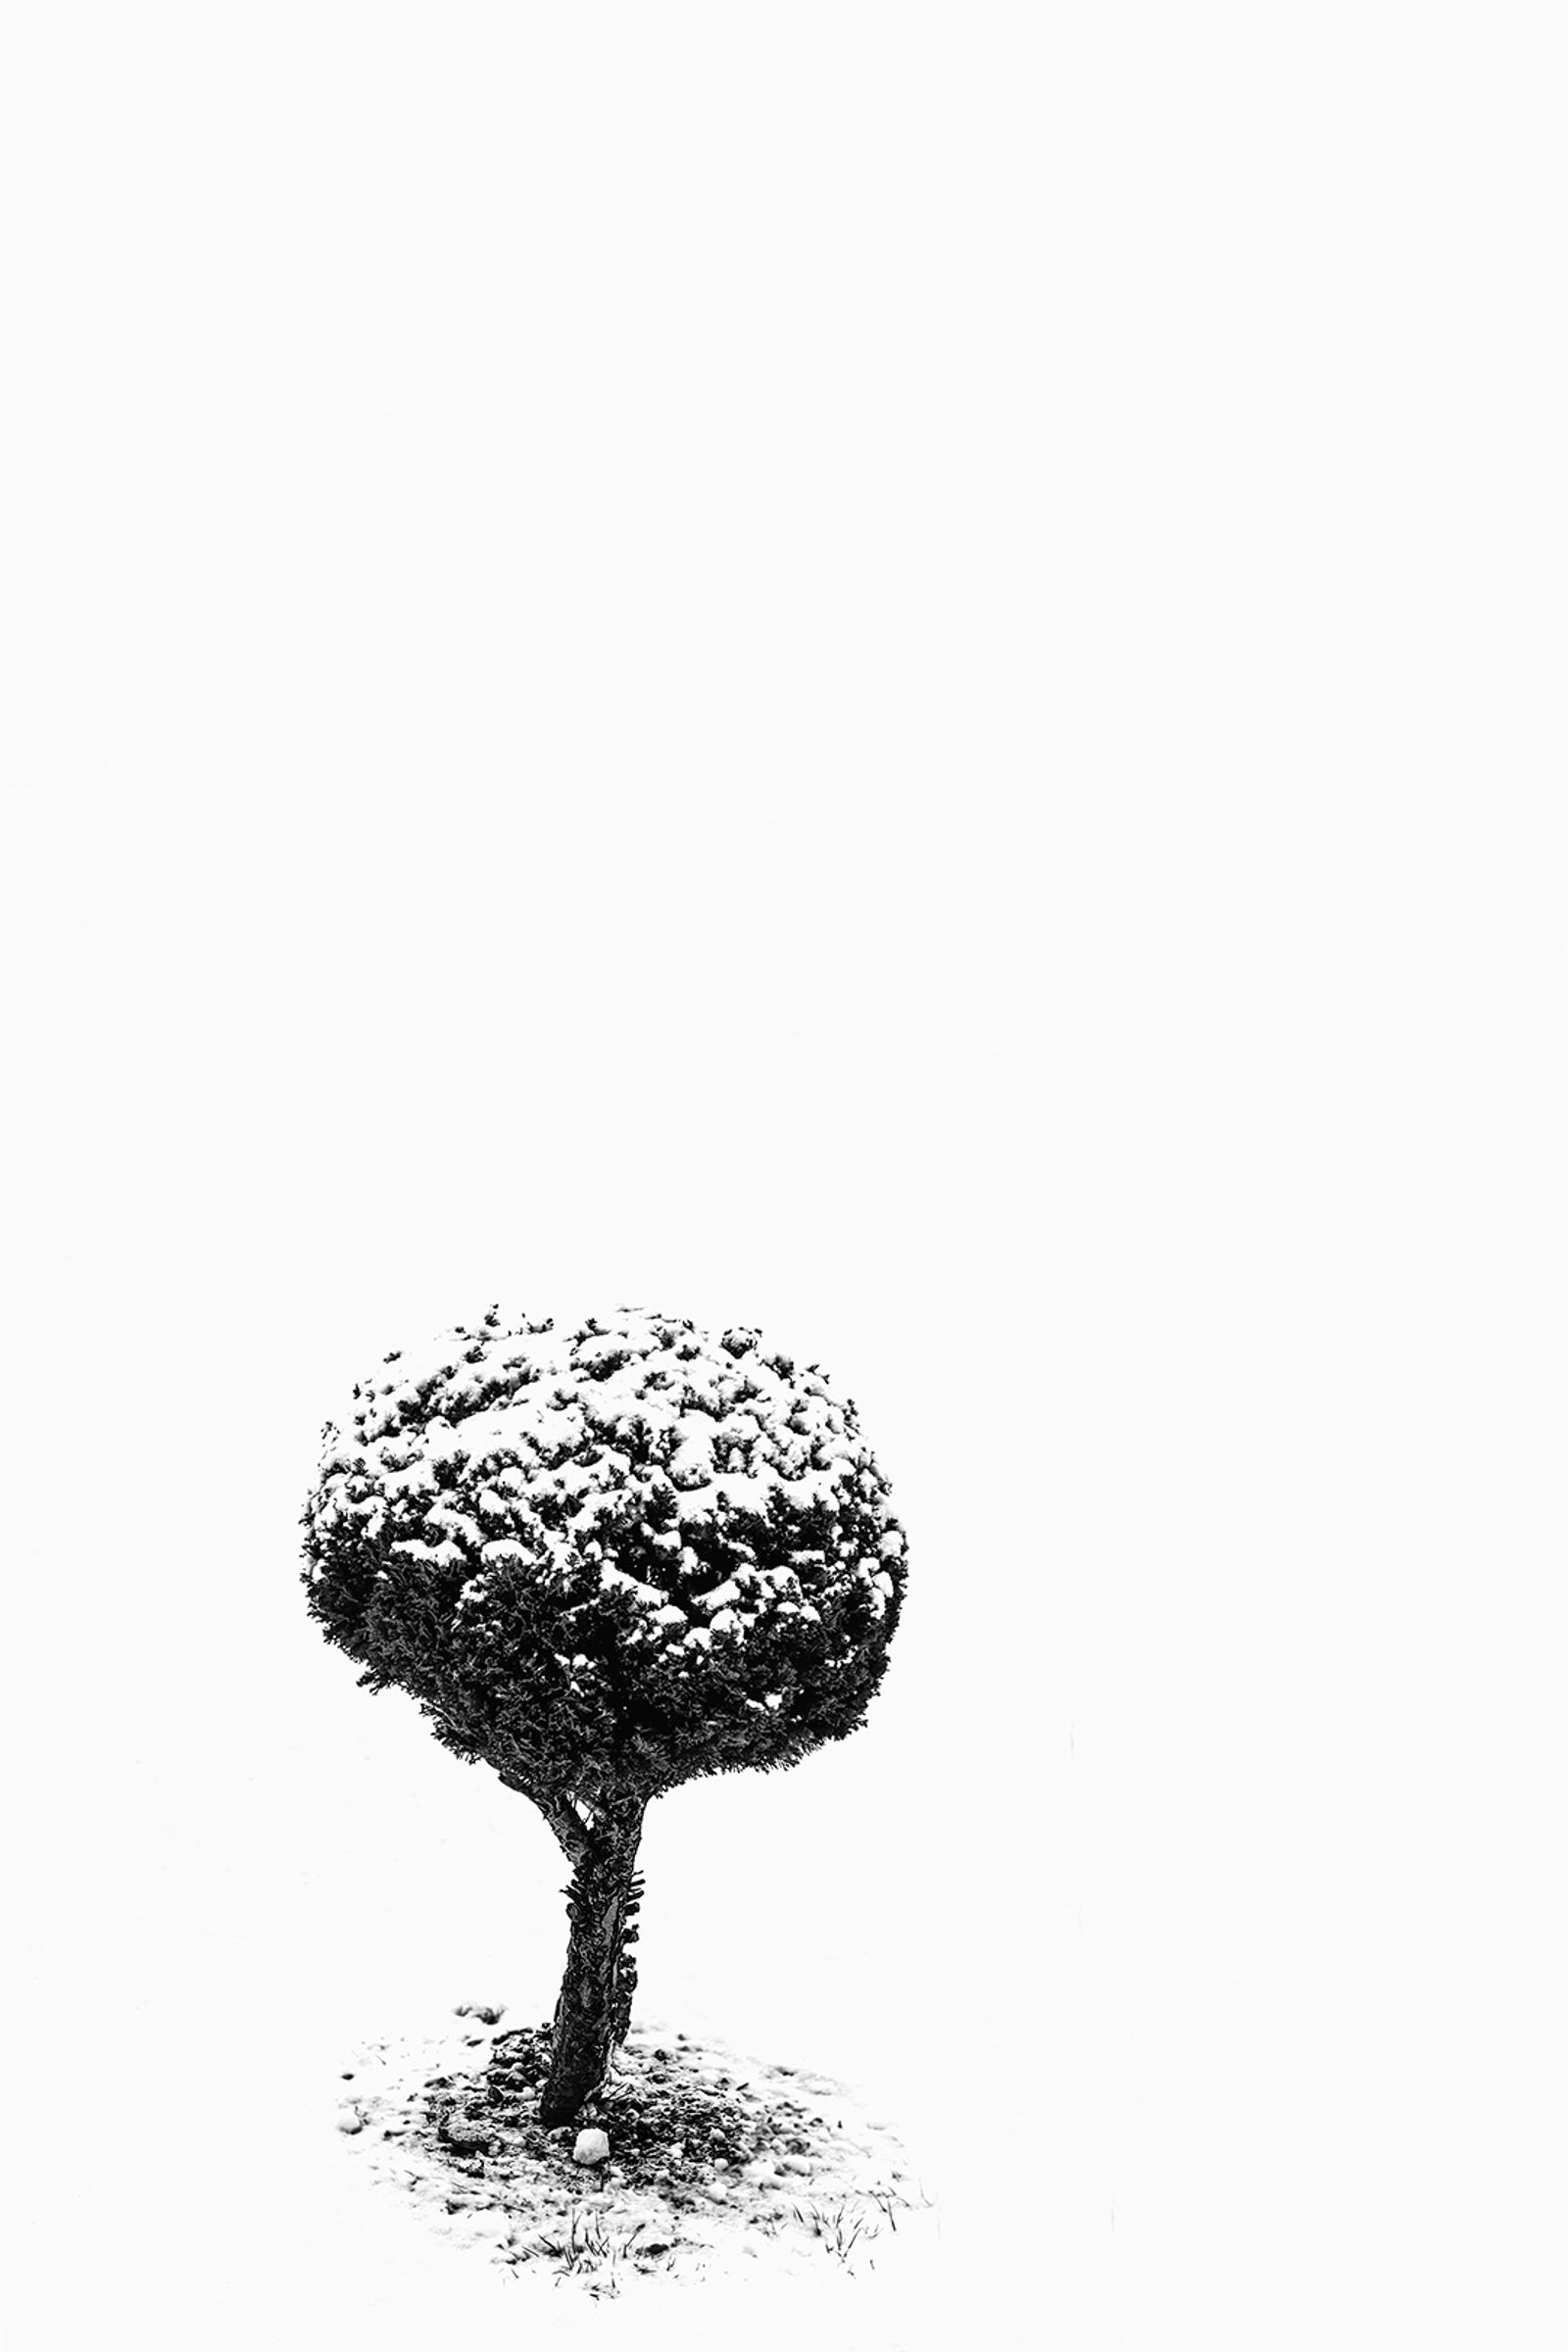 © Meri Boshkoska - The small tree